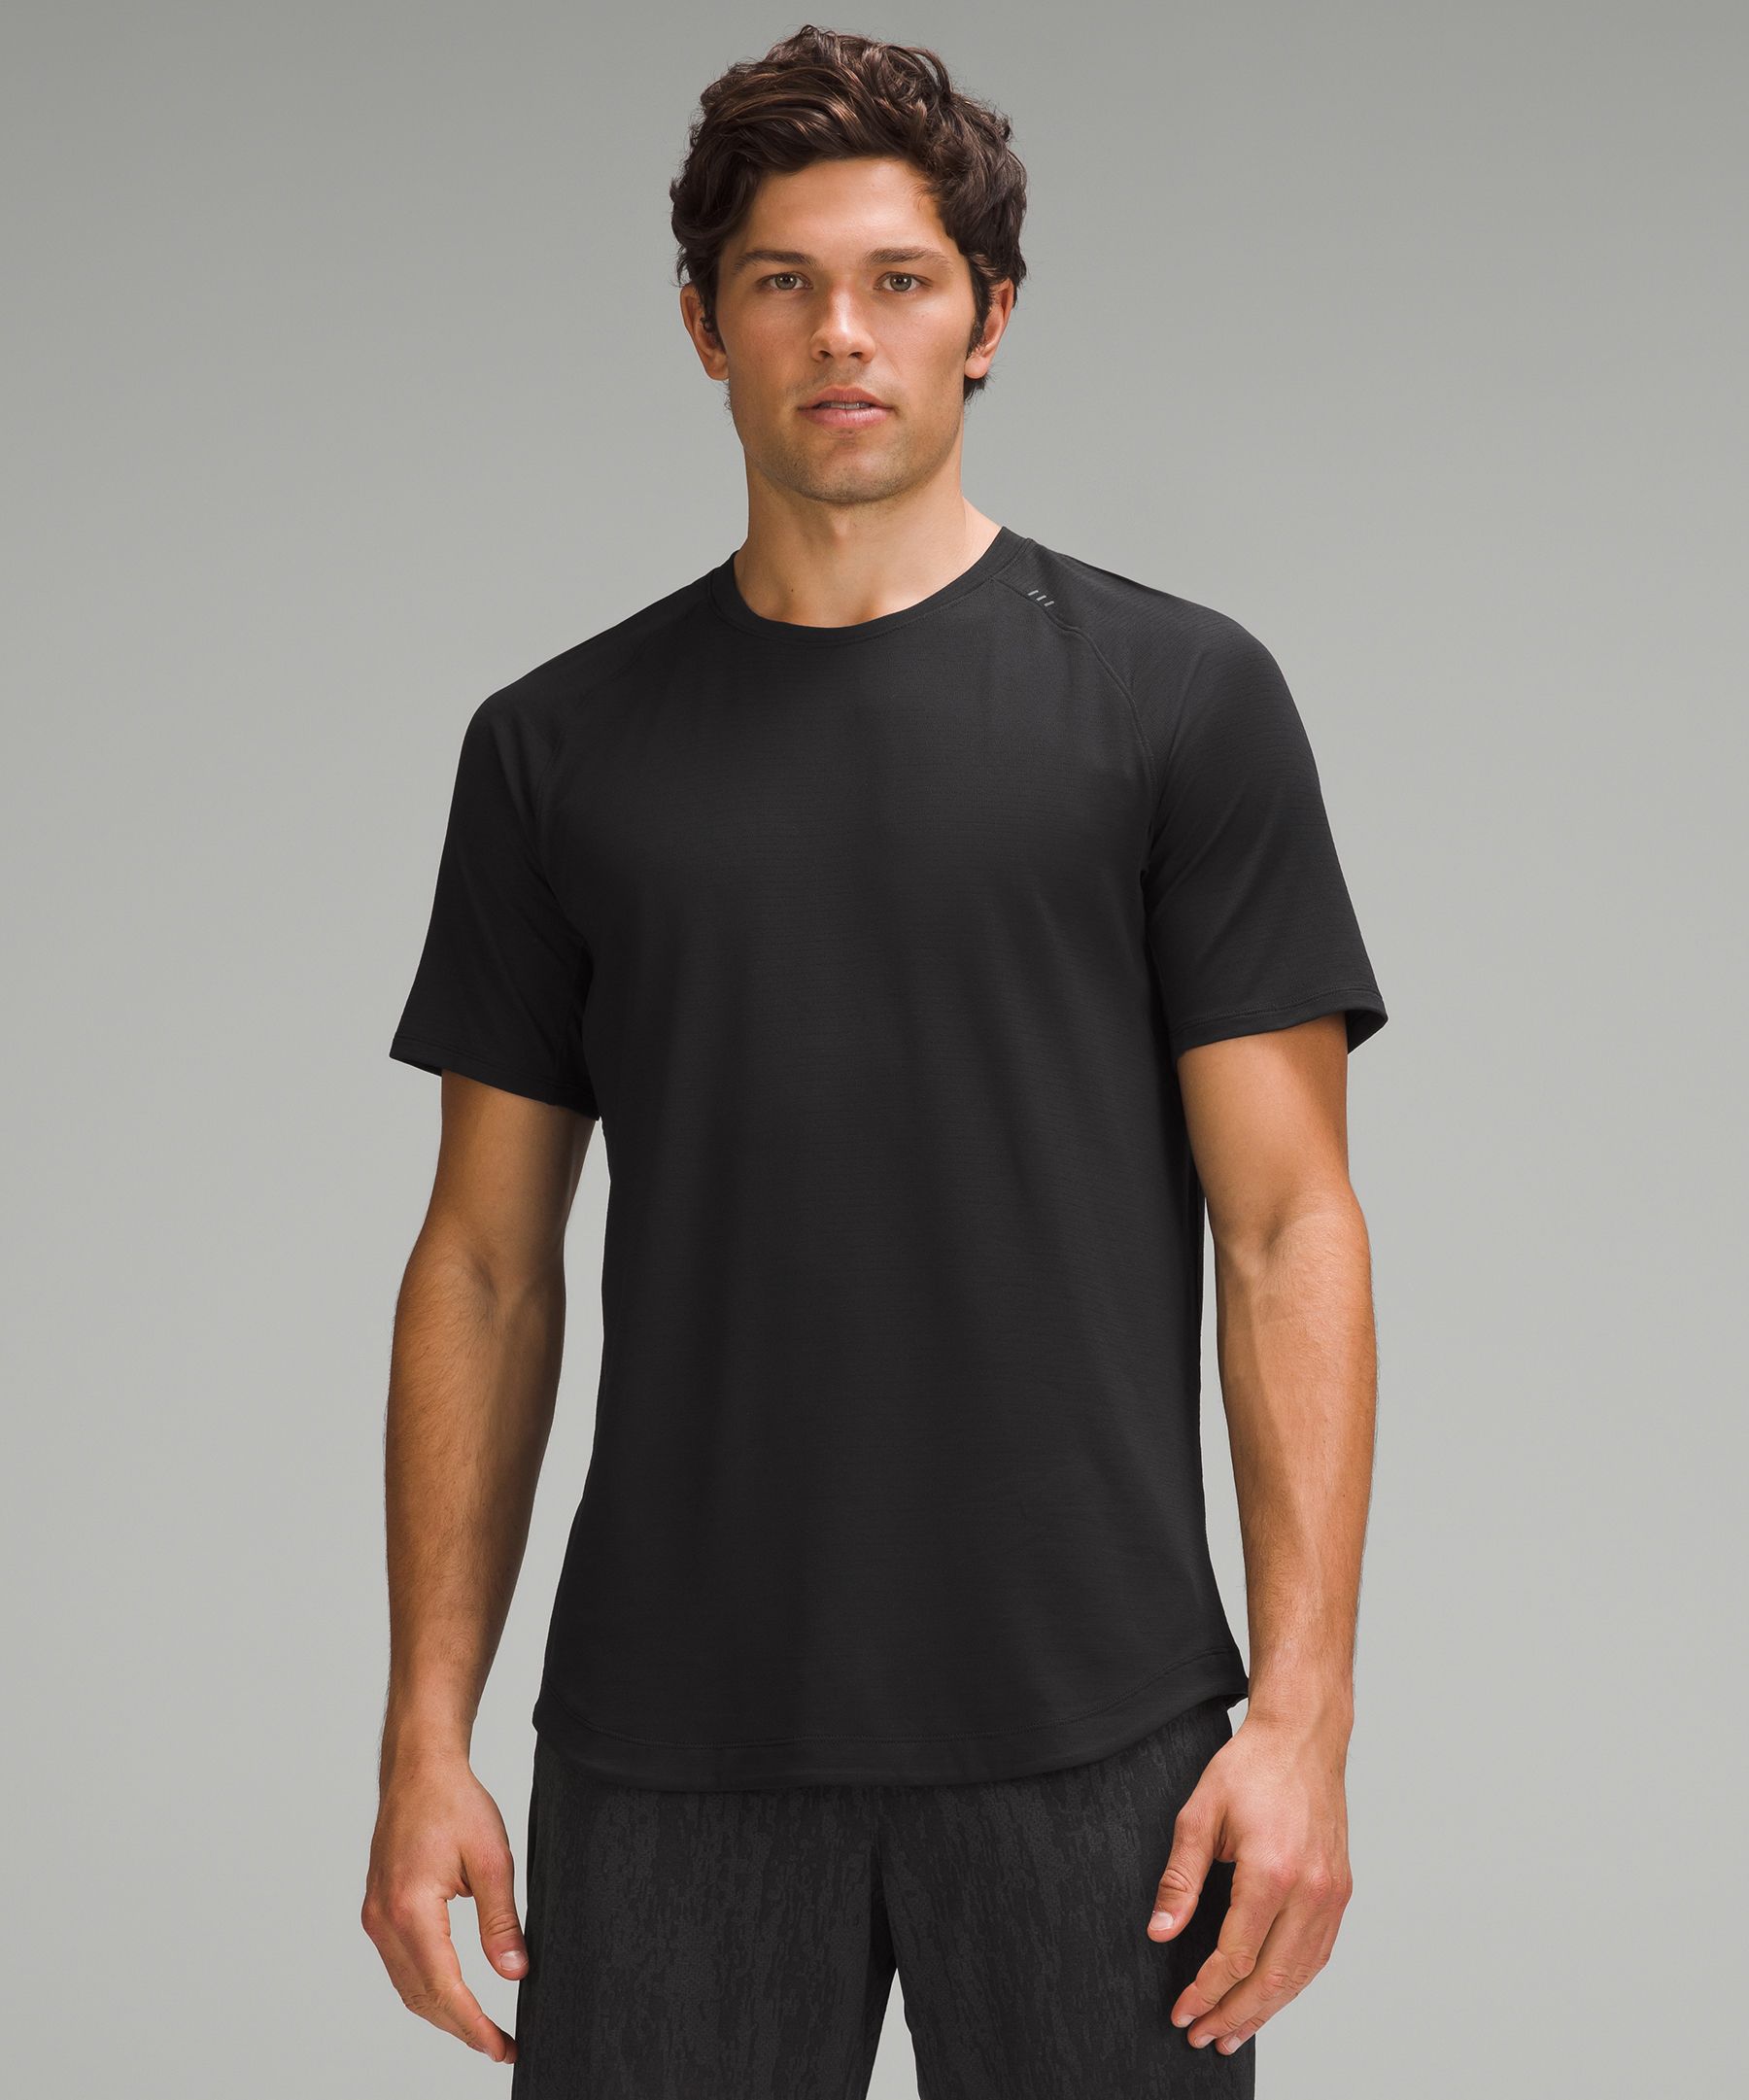 License to Train Short-Sleeve Shirt | Men's Short Sleeve Shirts & Tee's ...